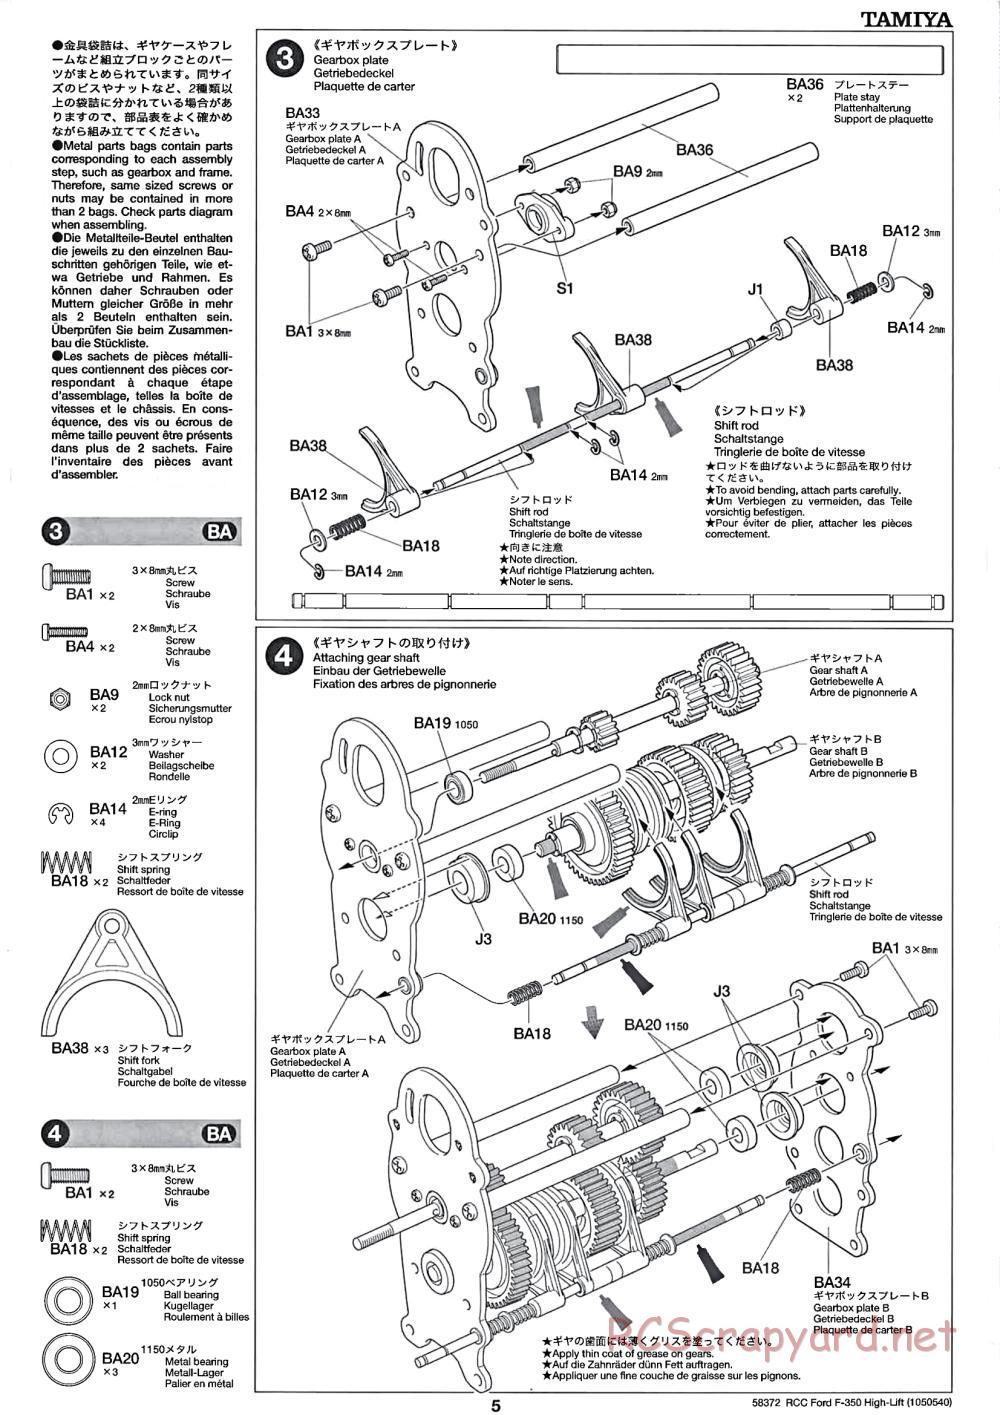 Tamiya - Ford F350 High-Lift Chassis - Manual - Page 5